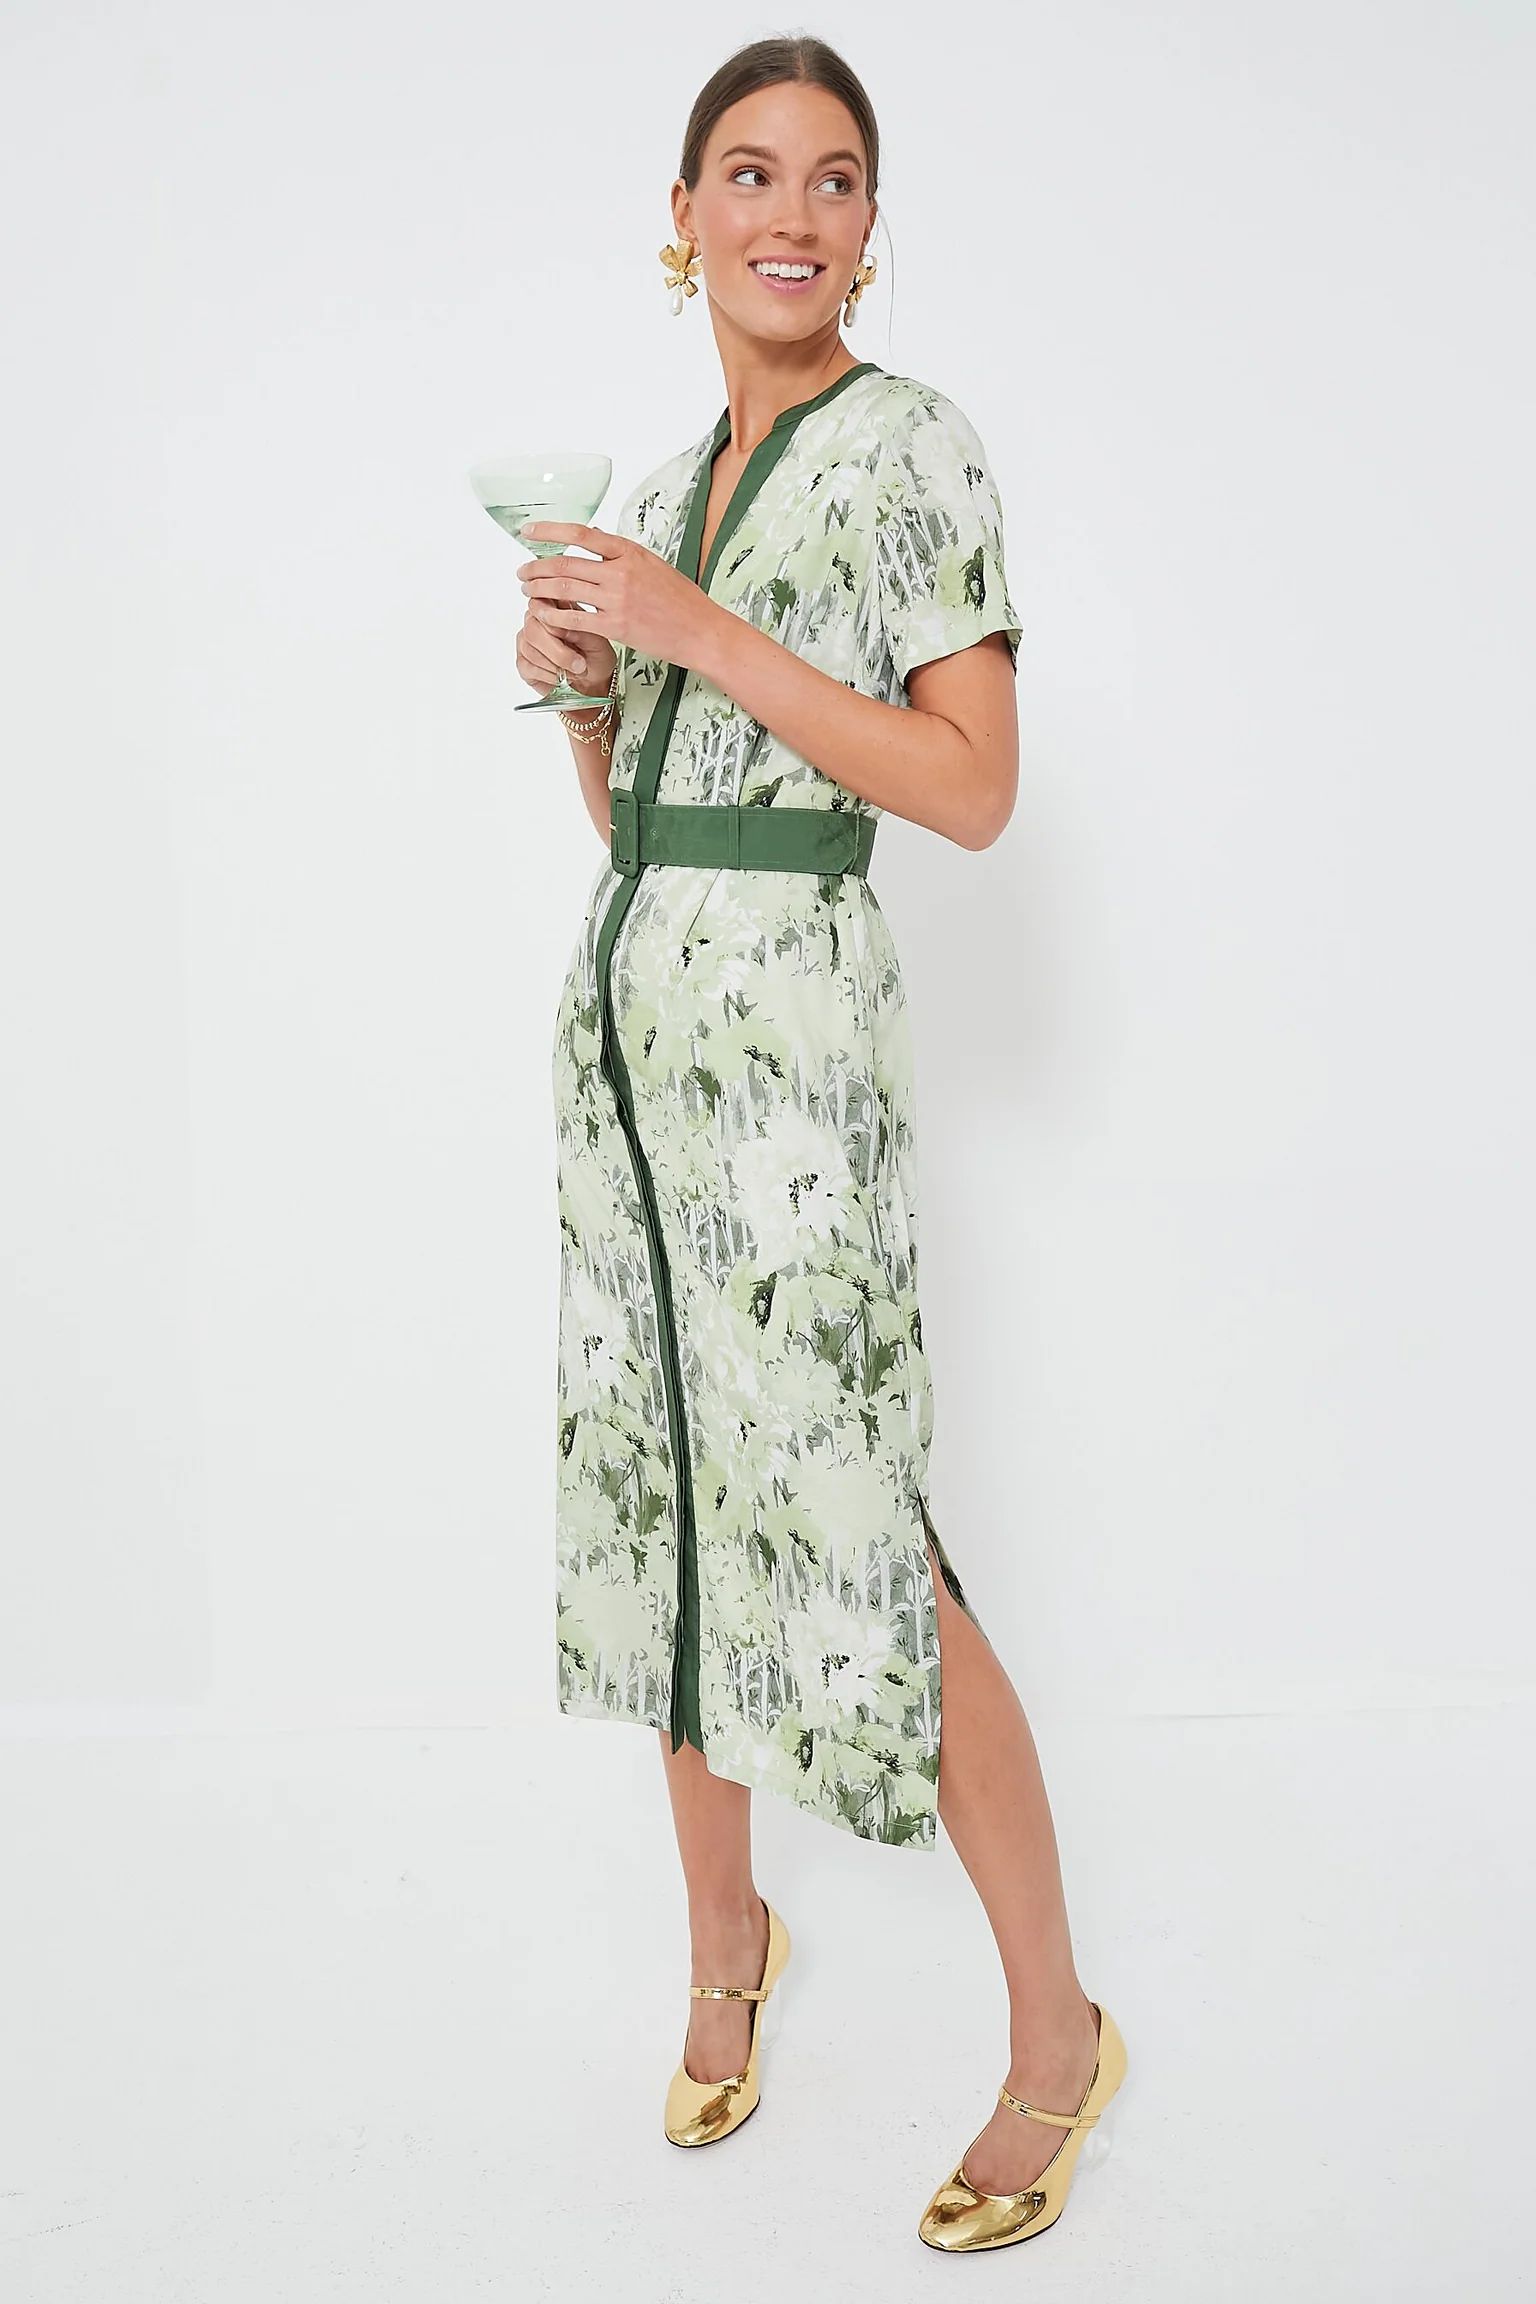 Shady Grove Floral Camille Dress | Tuckernuck (US)